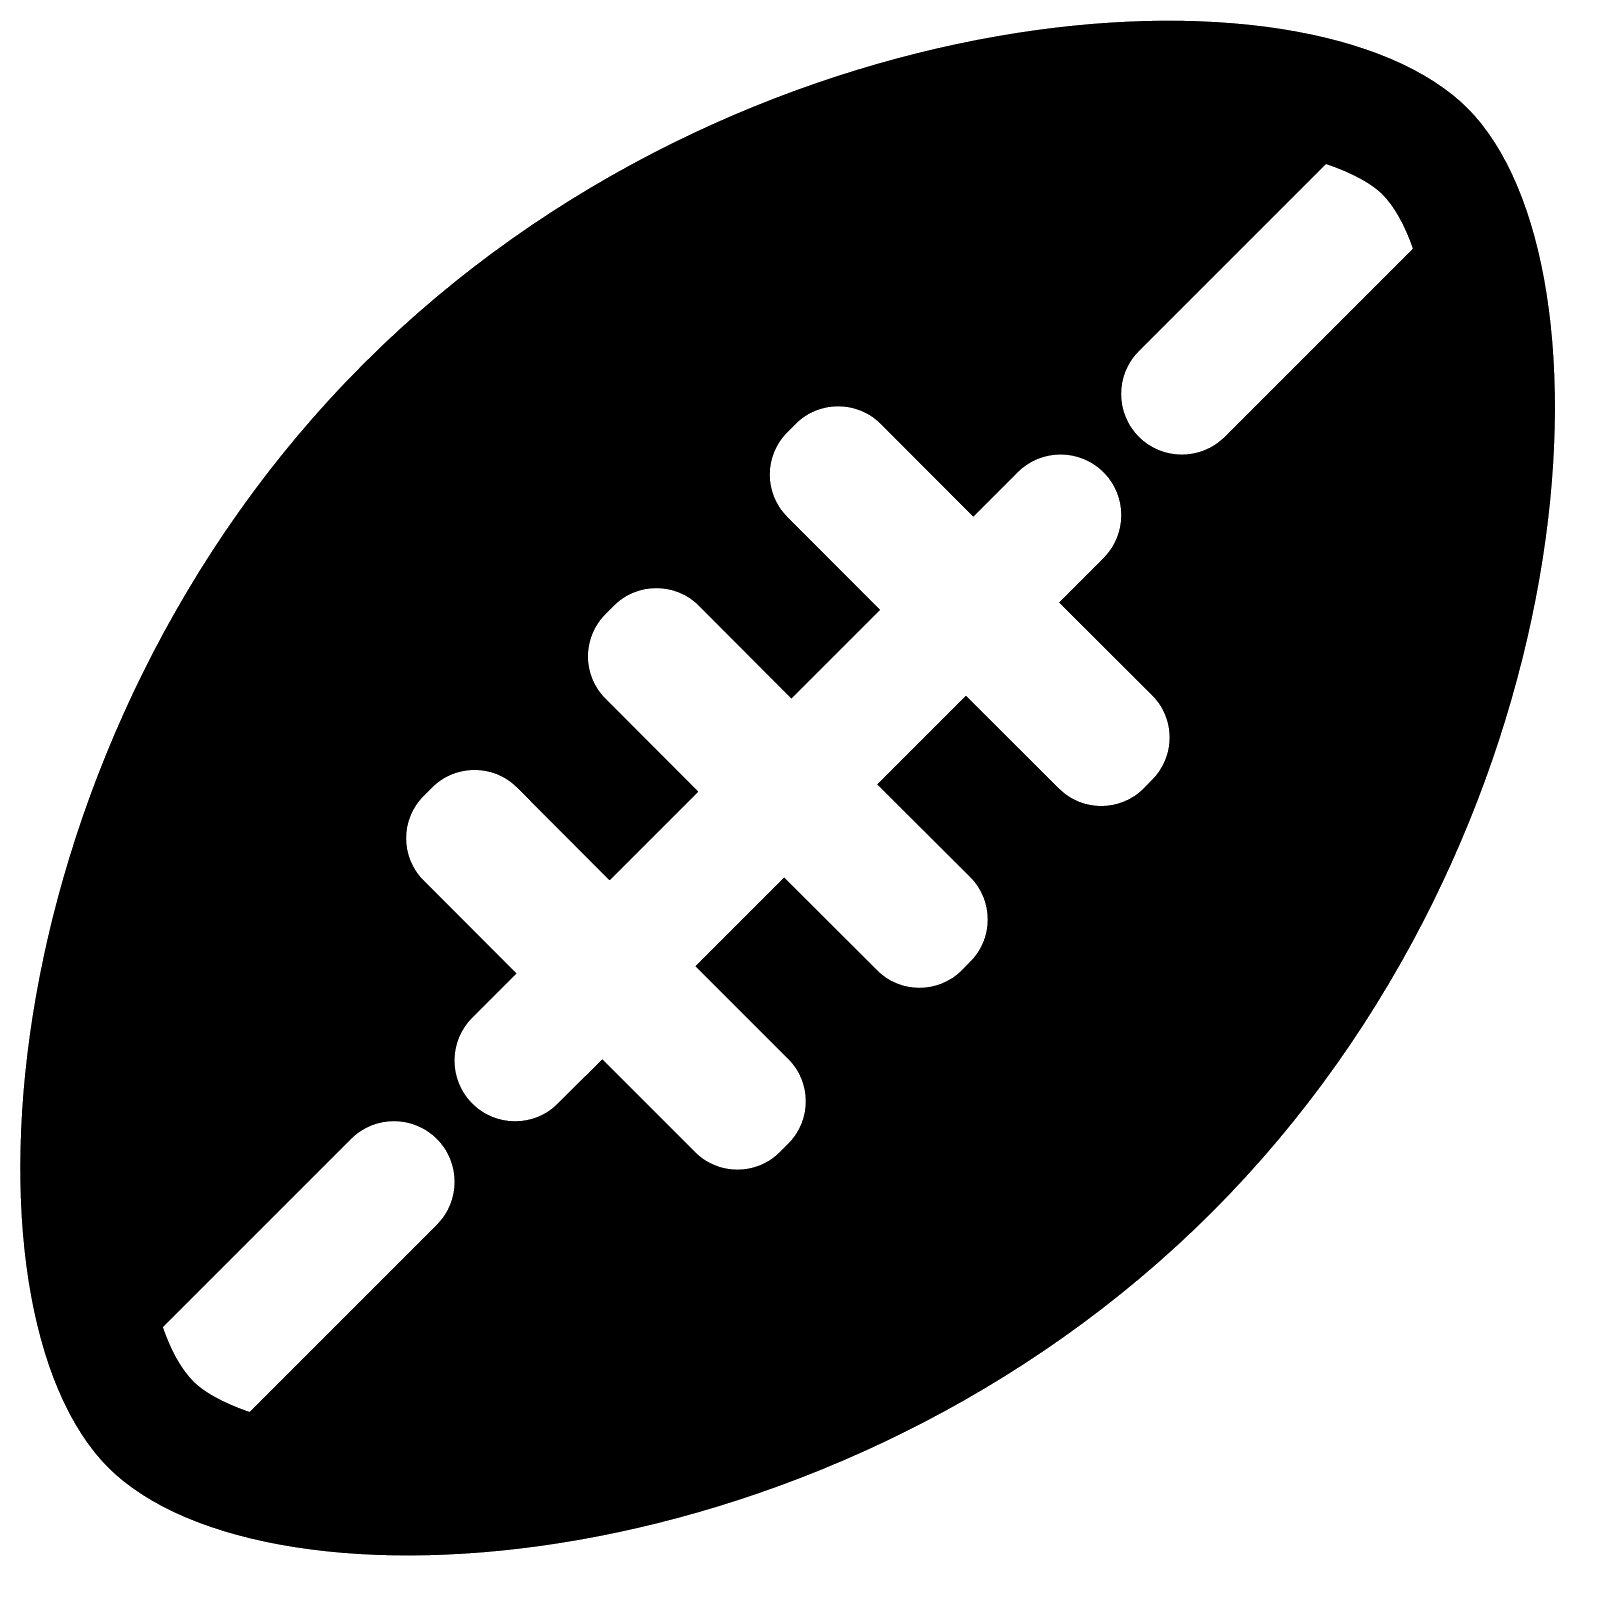 Sport icon set black stock vector. Illustration of boxing - 45063371